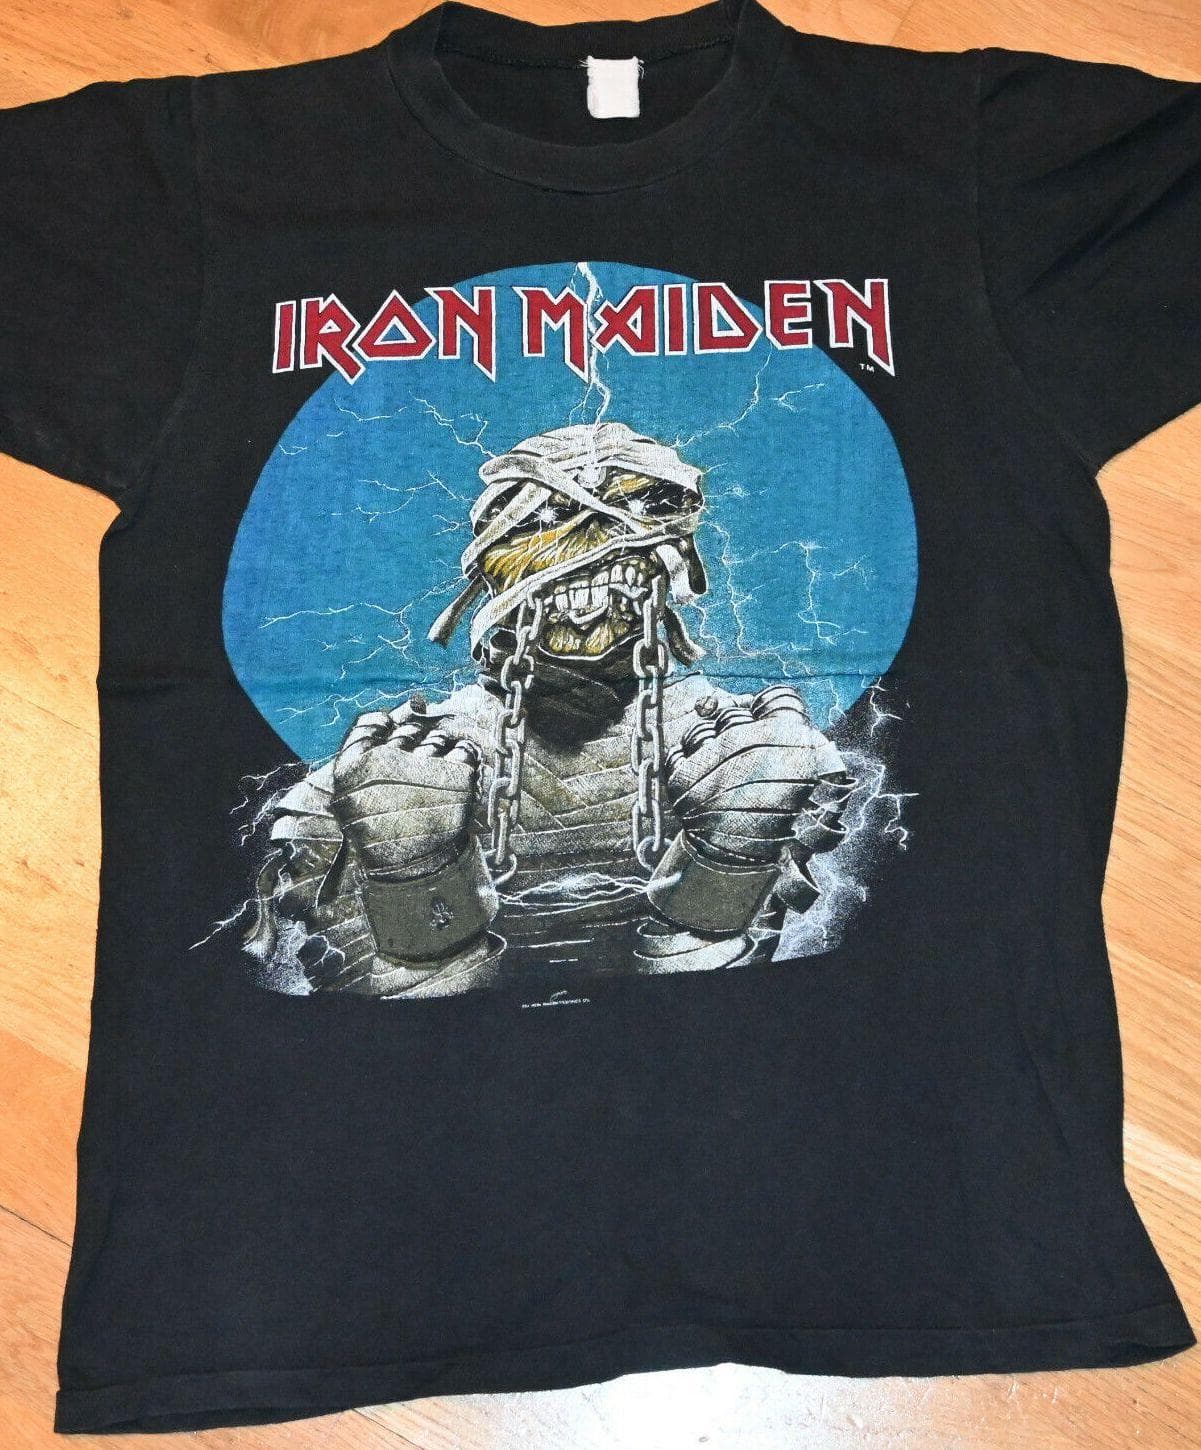 80s rock band t shirts